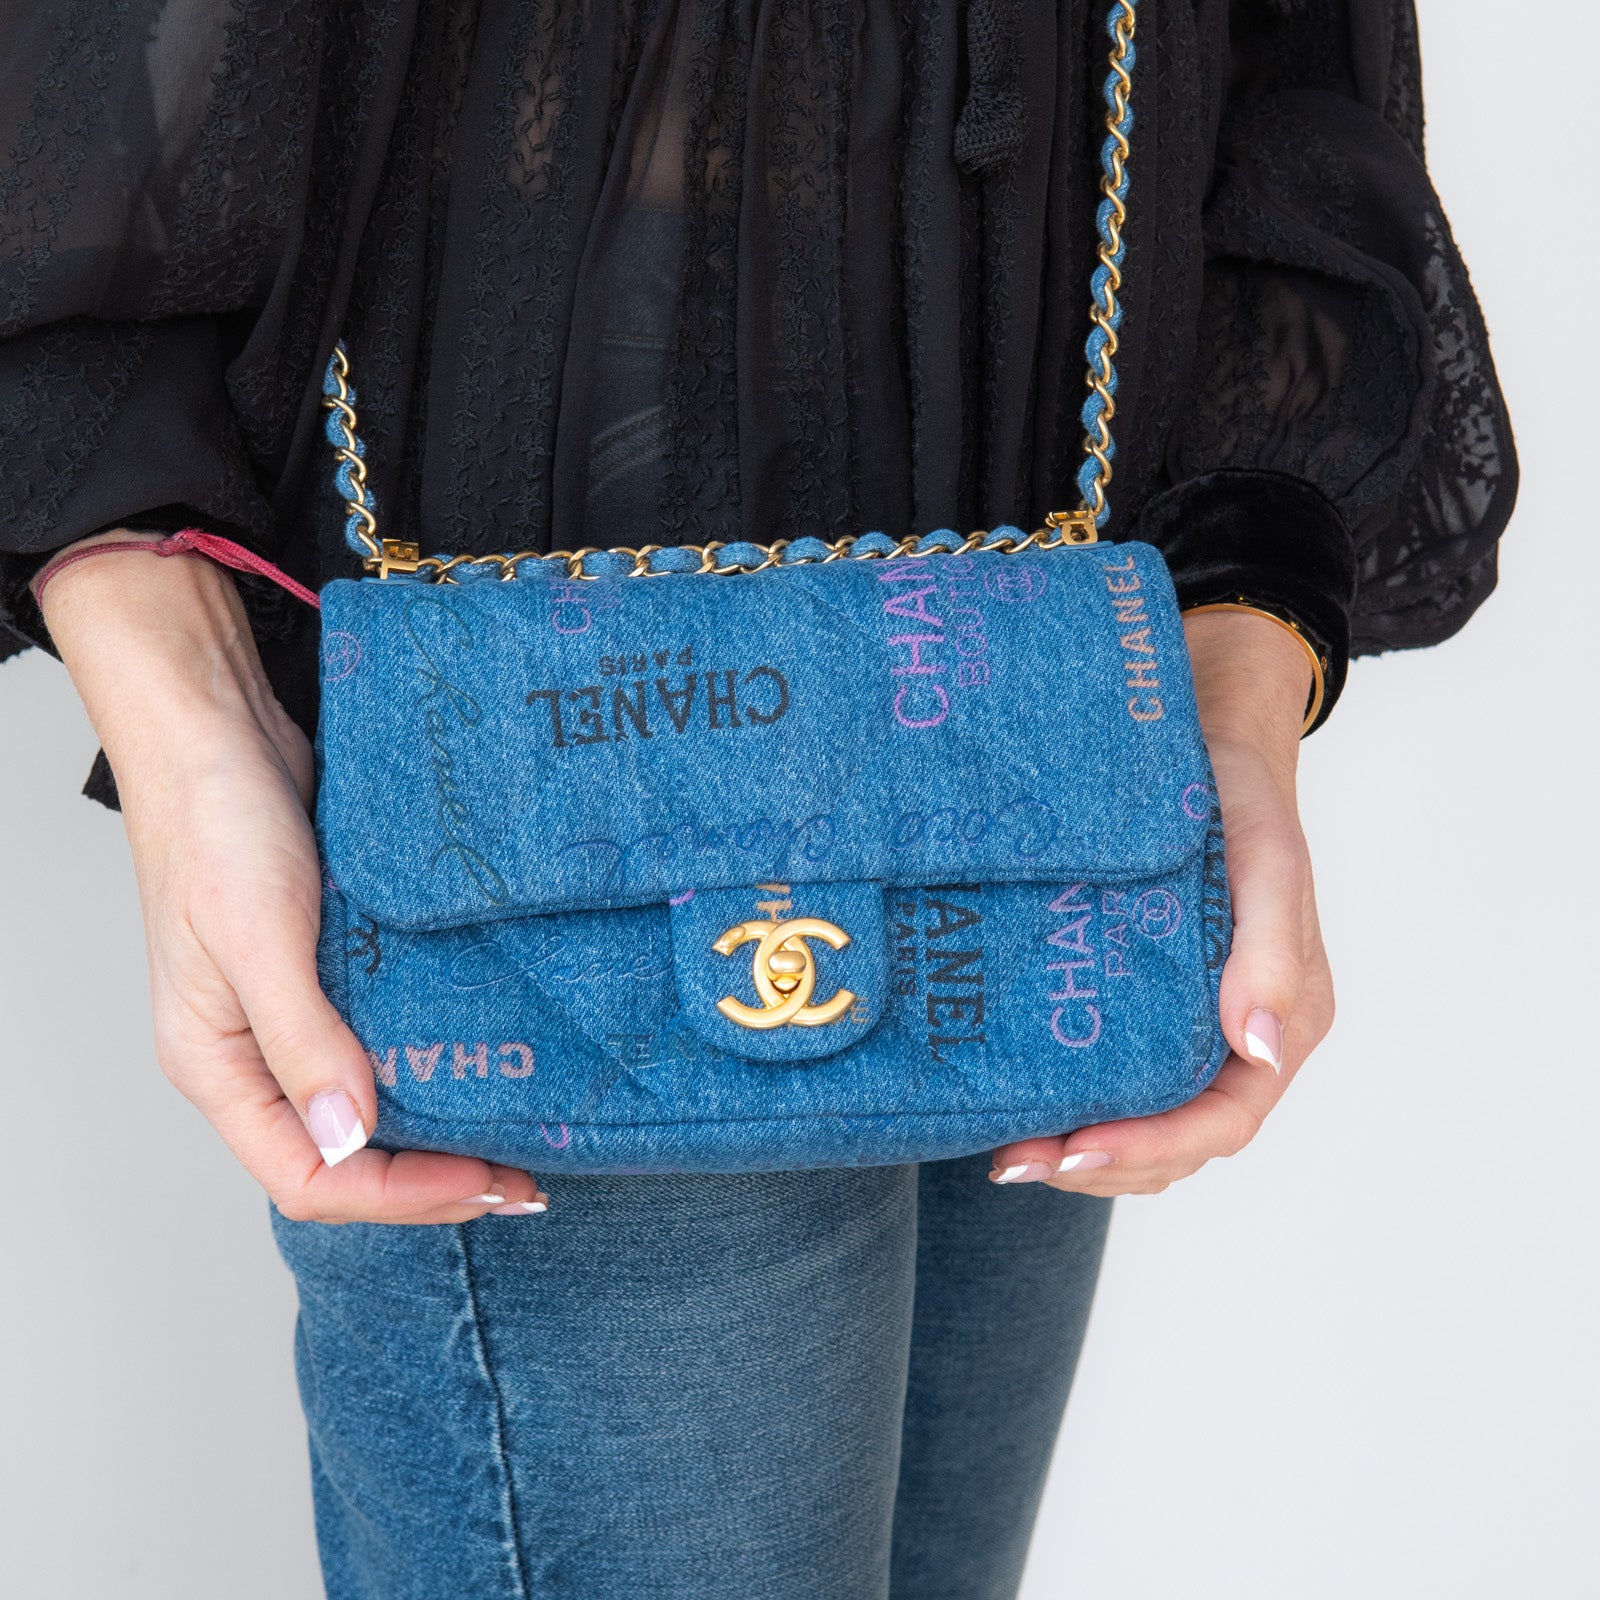 Chanel Blue Denim Small Flap Bag - Image 11 of 15